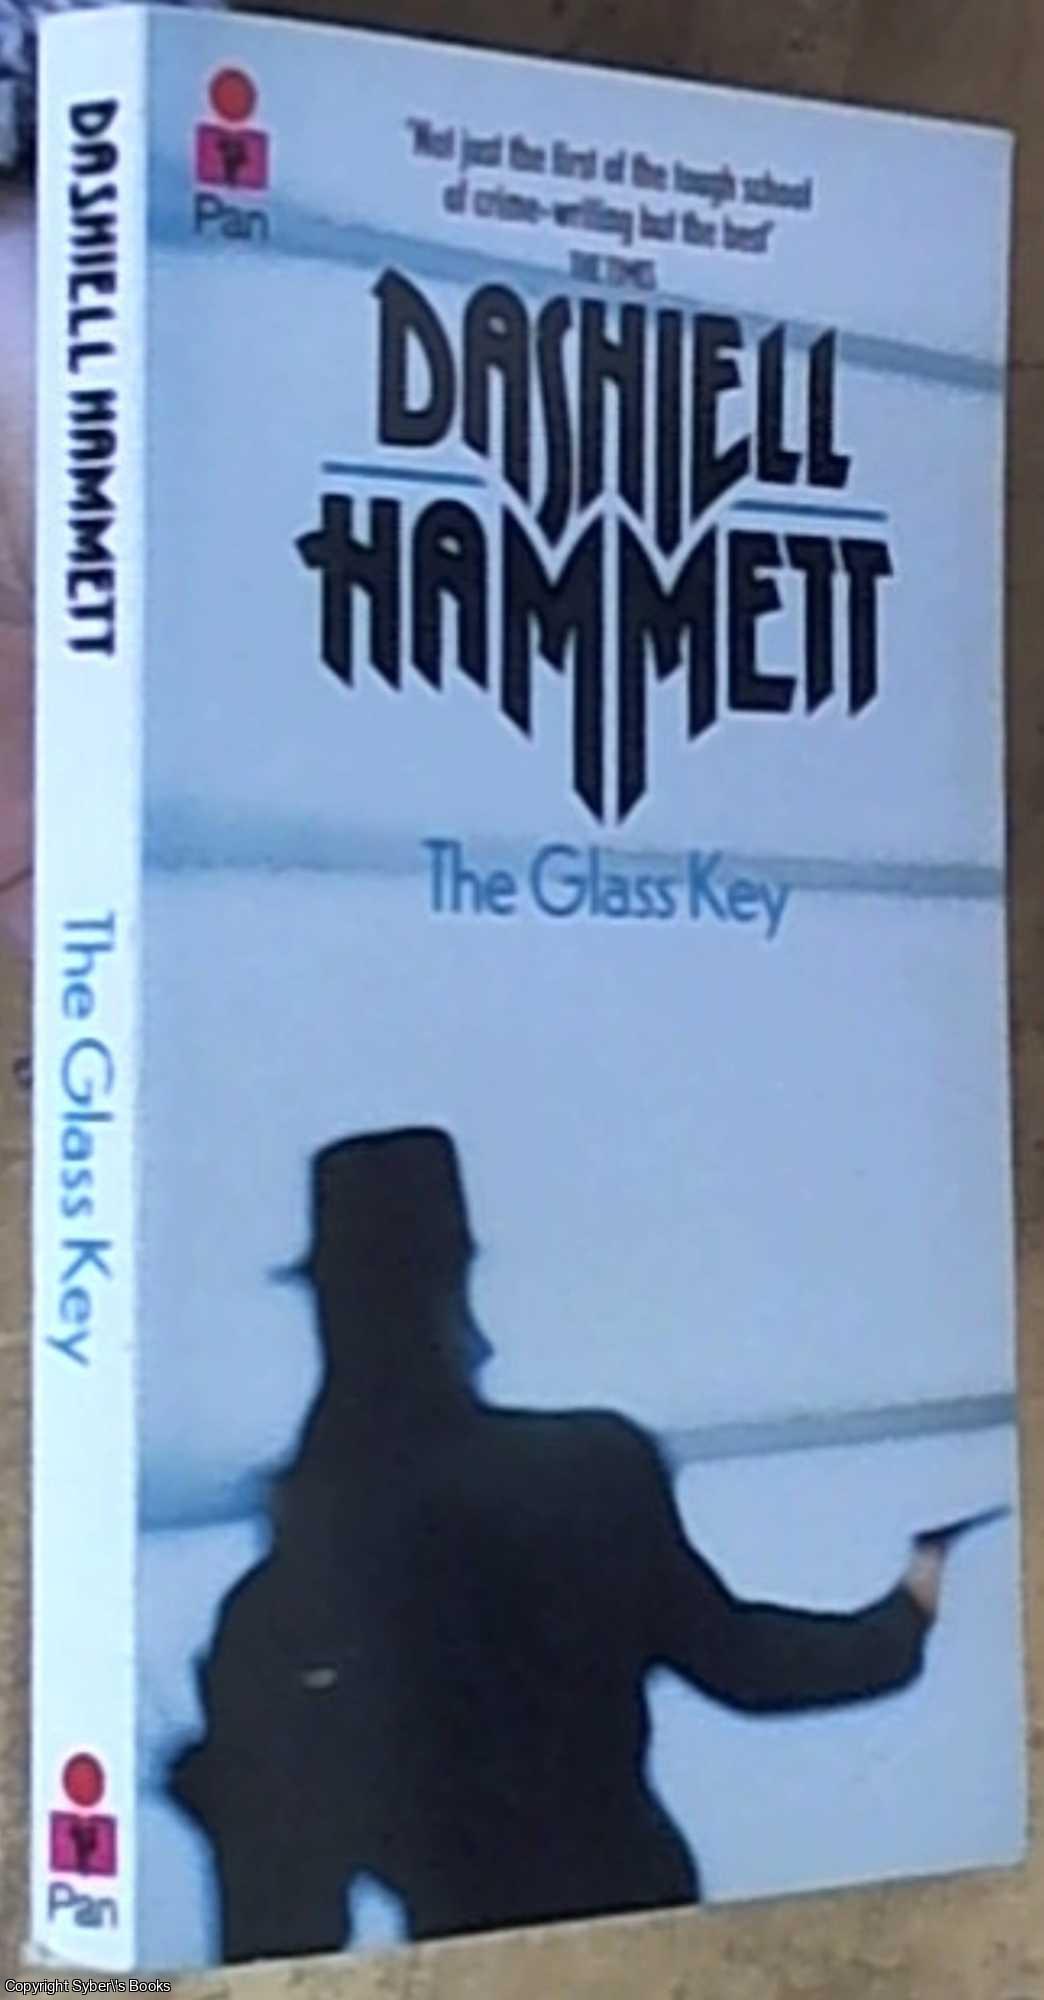 Hammett, Dashiell - The Glass Key